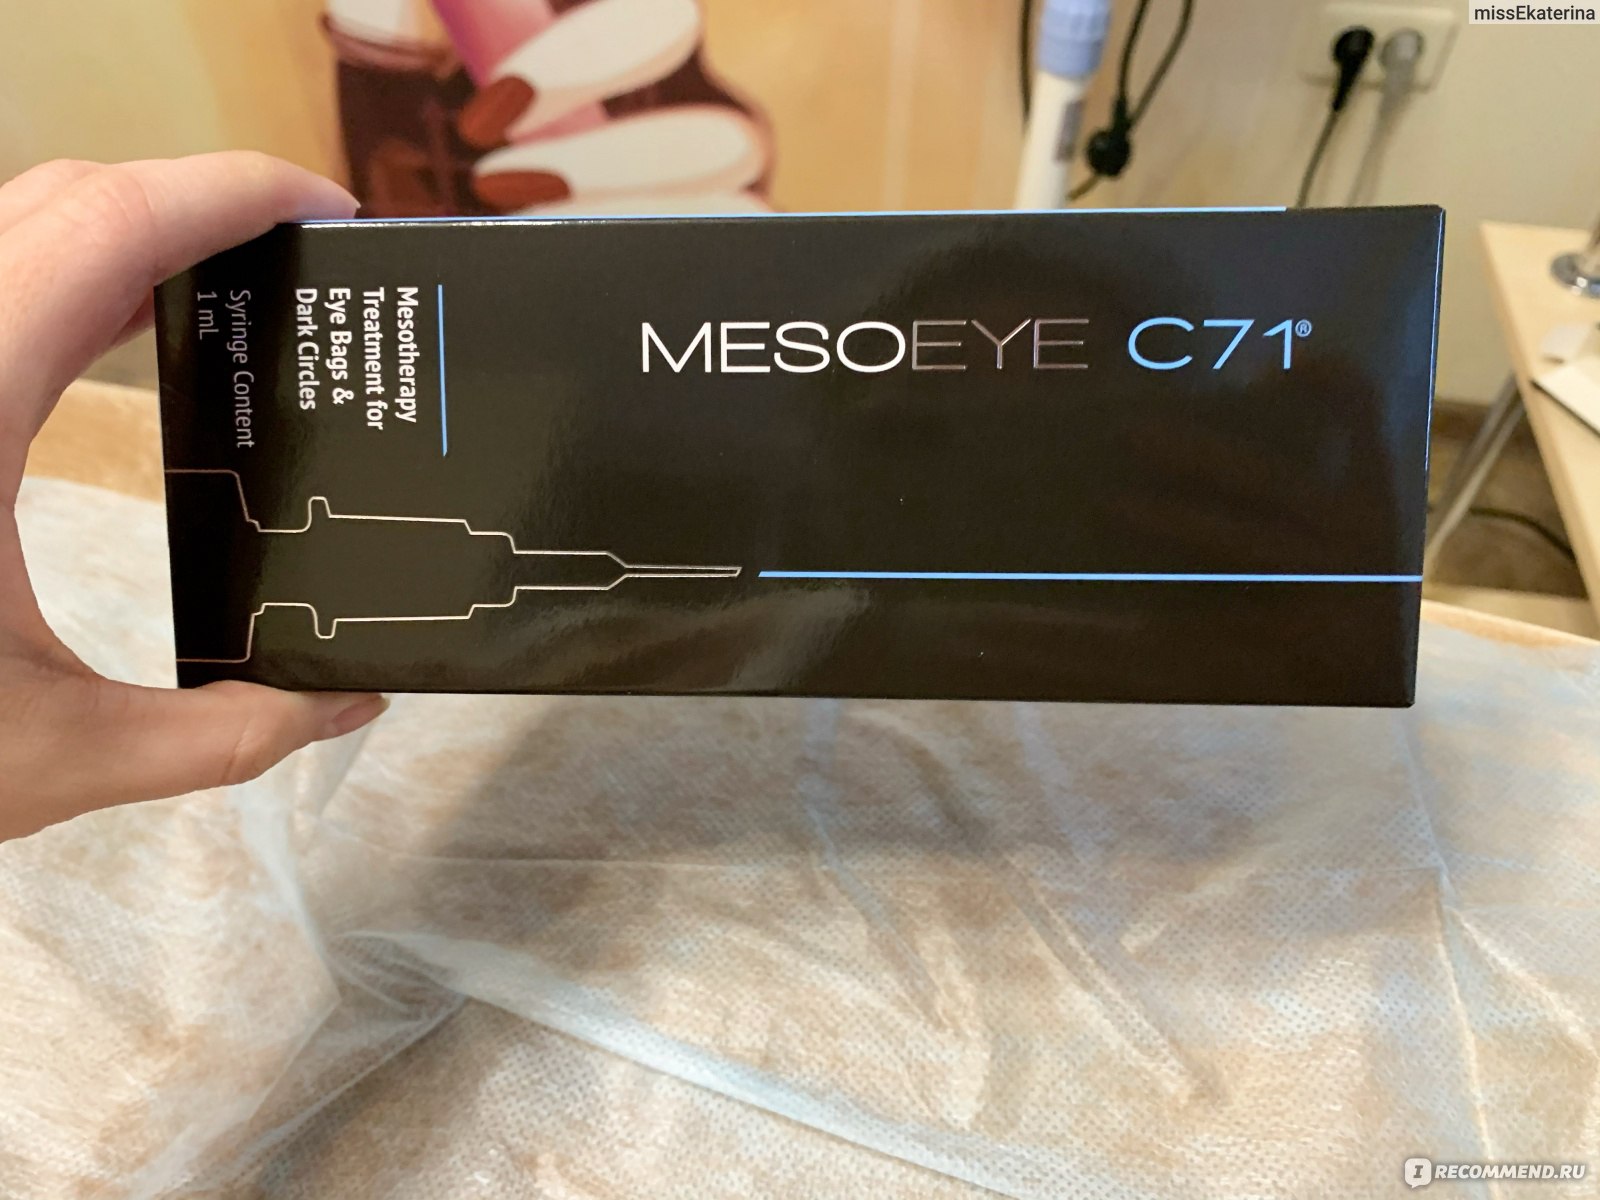 Mesoeye c71 отзывы